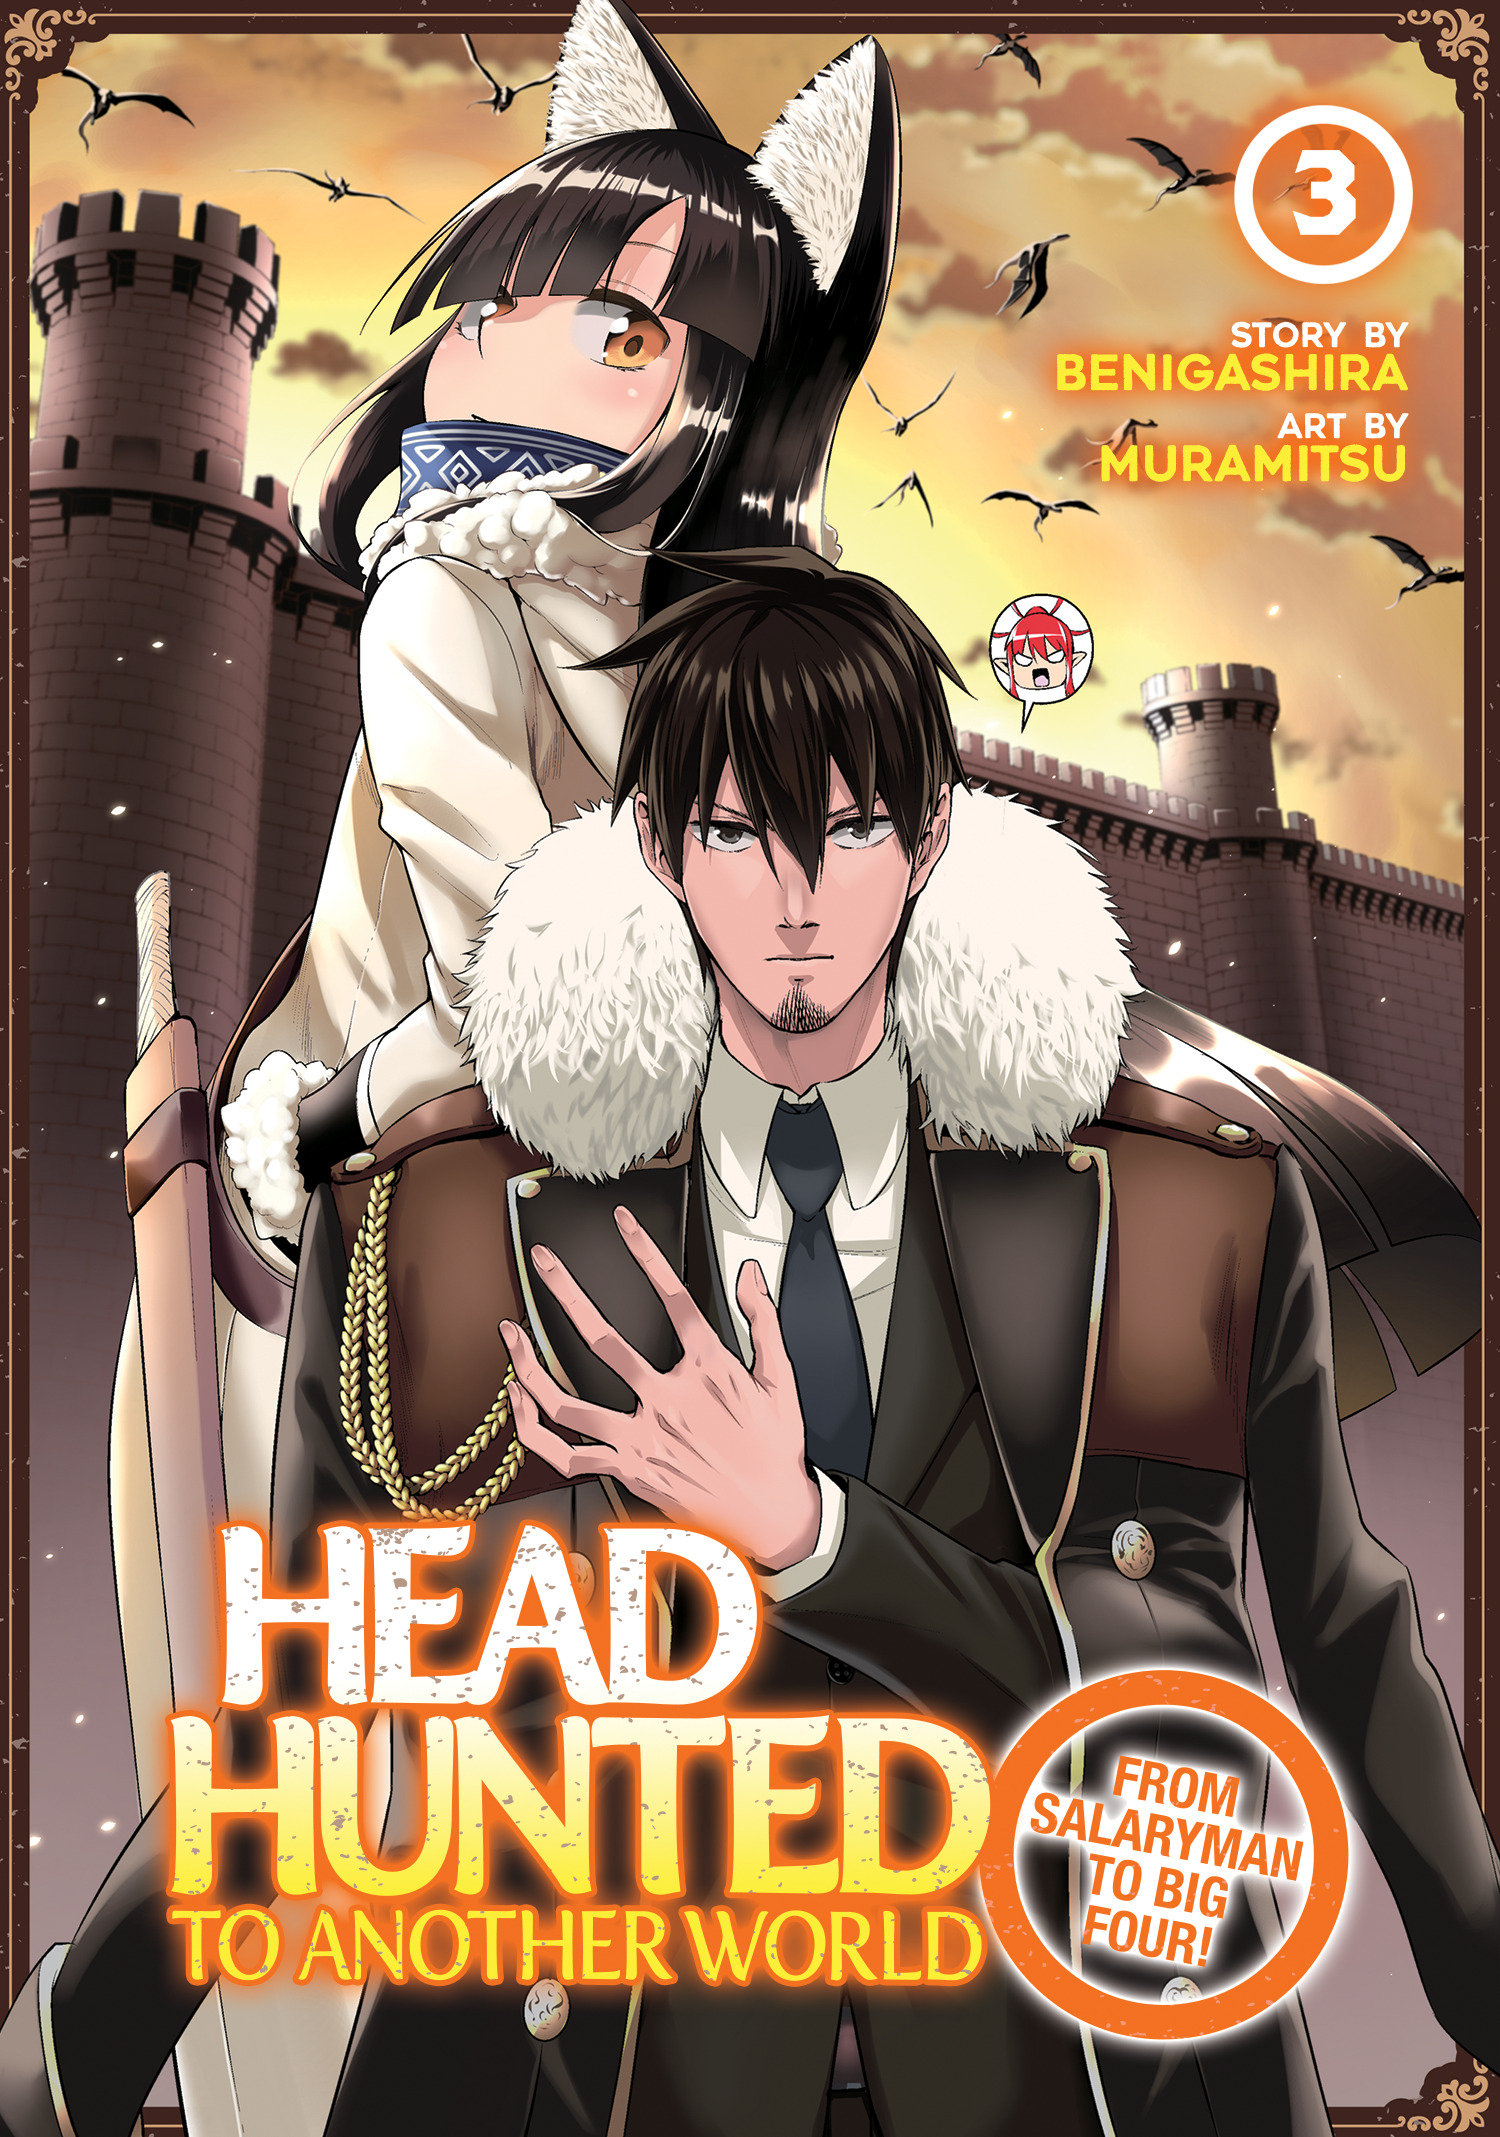 Headhunted to Another World: From Salaryman to Big Four Manga Volume 3